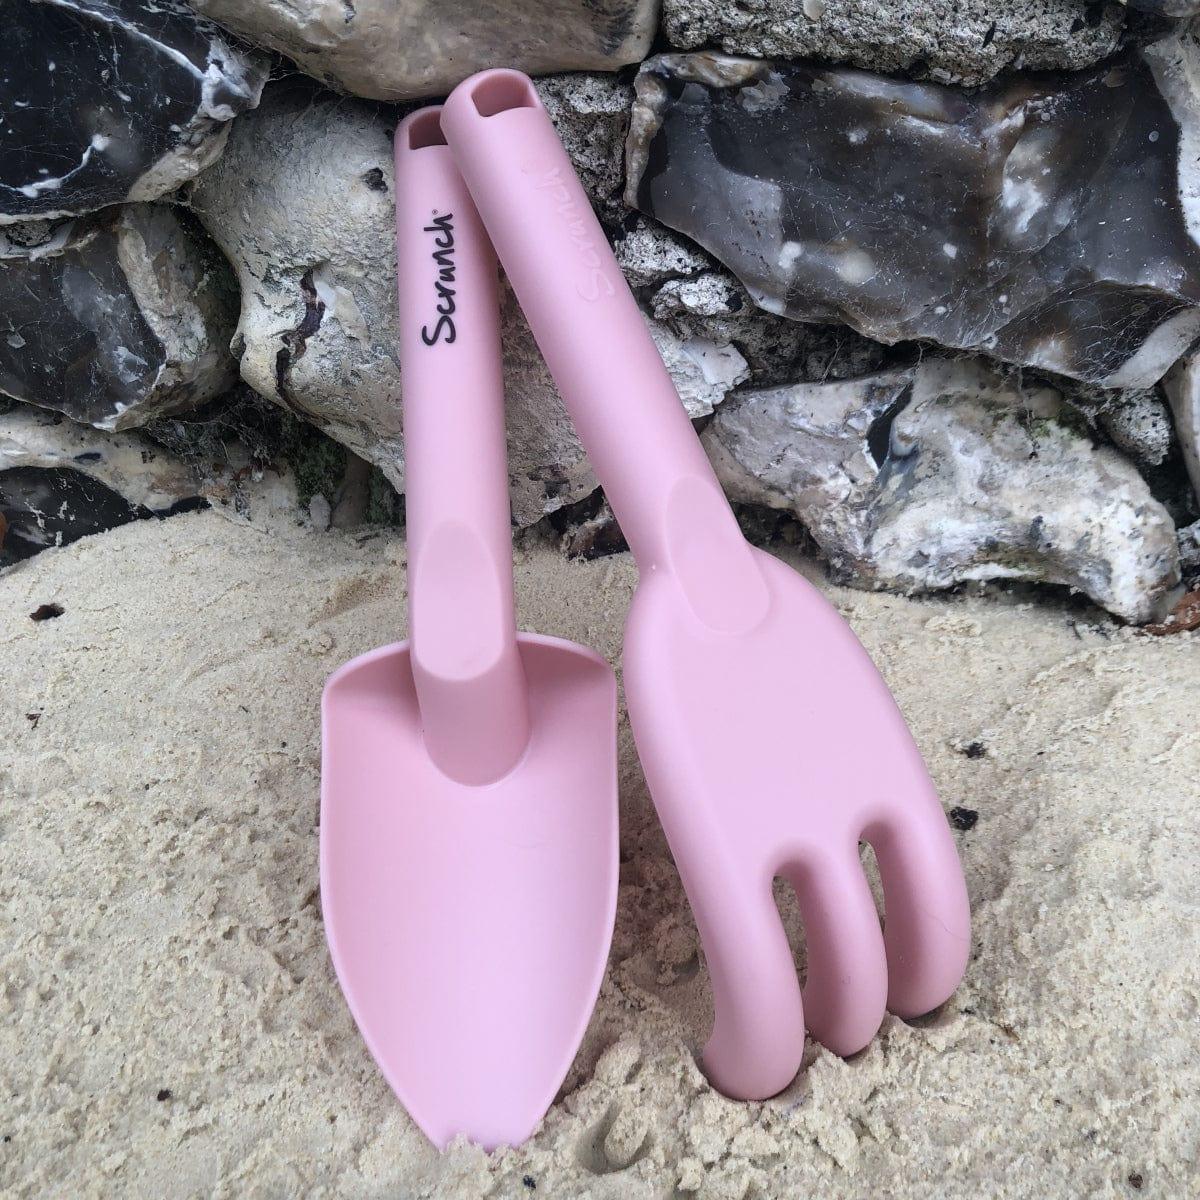 Scrunch Toys Rakes Scrunch Rake Flamingo Pink (7661854261496)